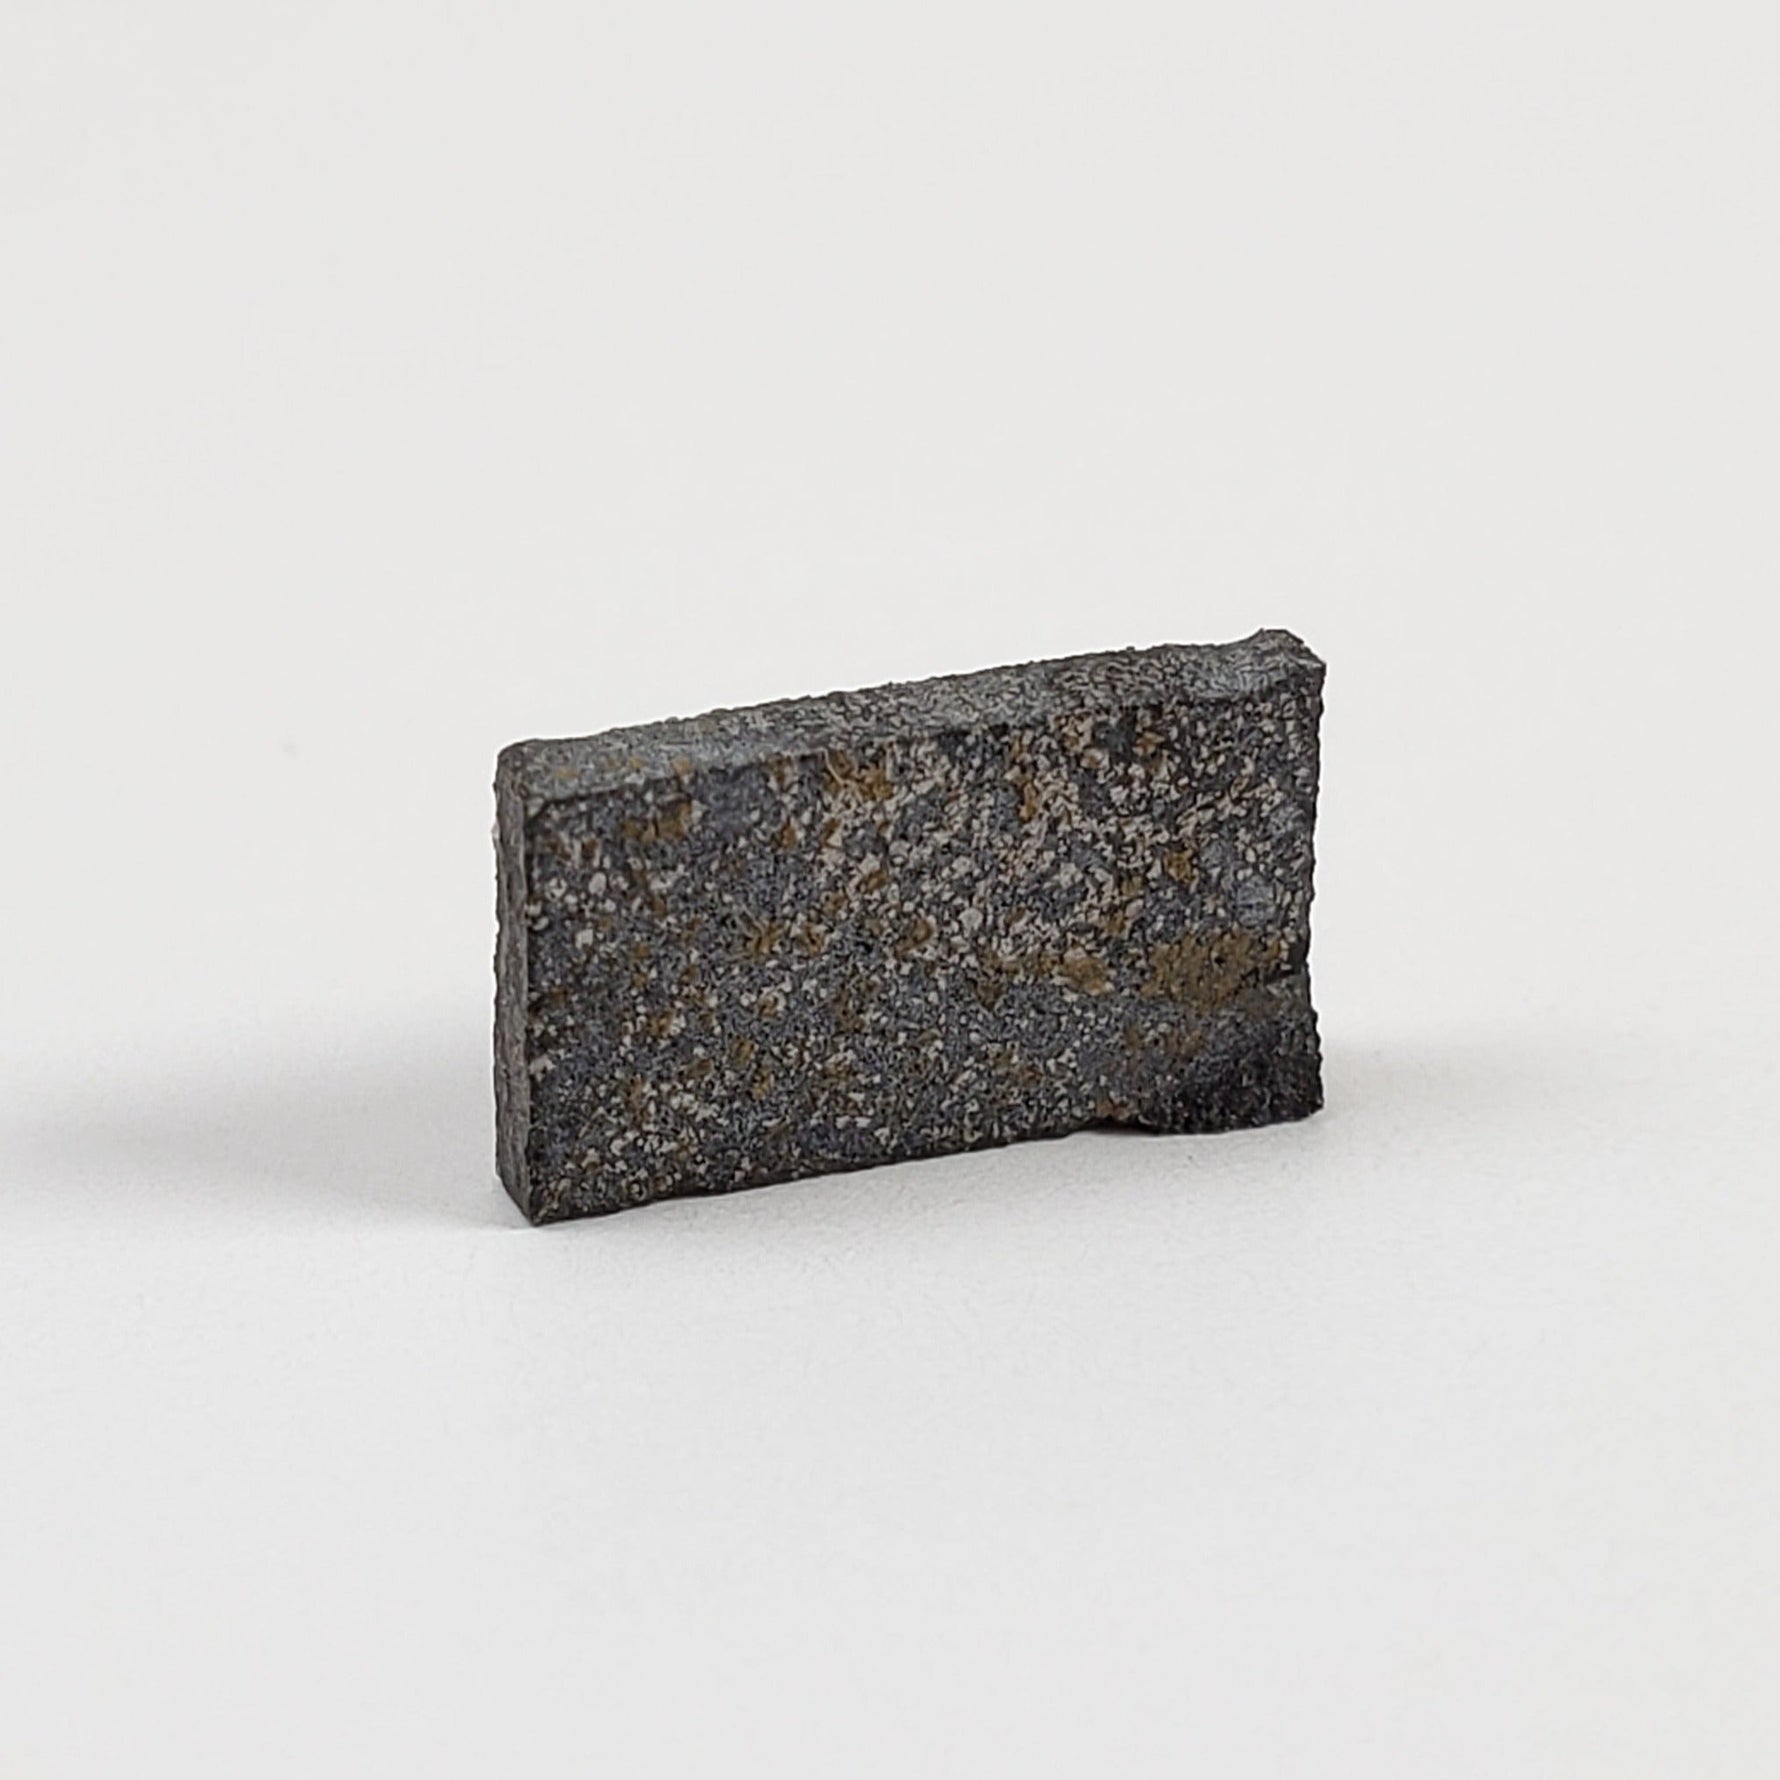 Abee Meteorite | 0.31gr | Part Slice | Rare Enstatite | EH4 Class | Observed Fall 1952 Canada